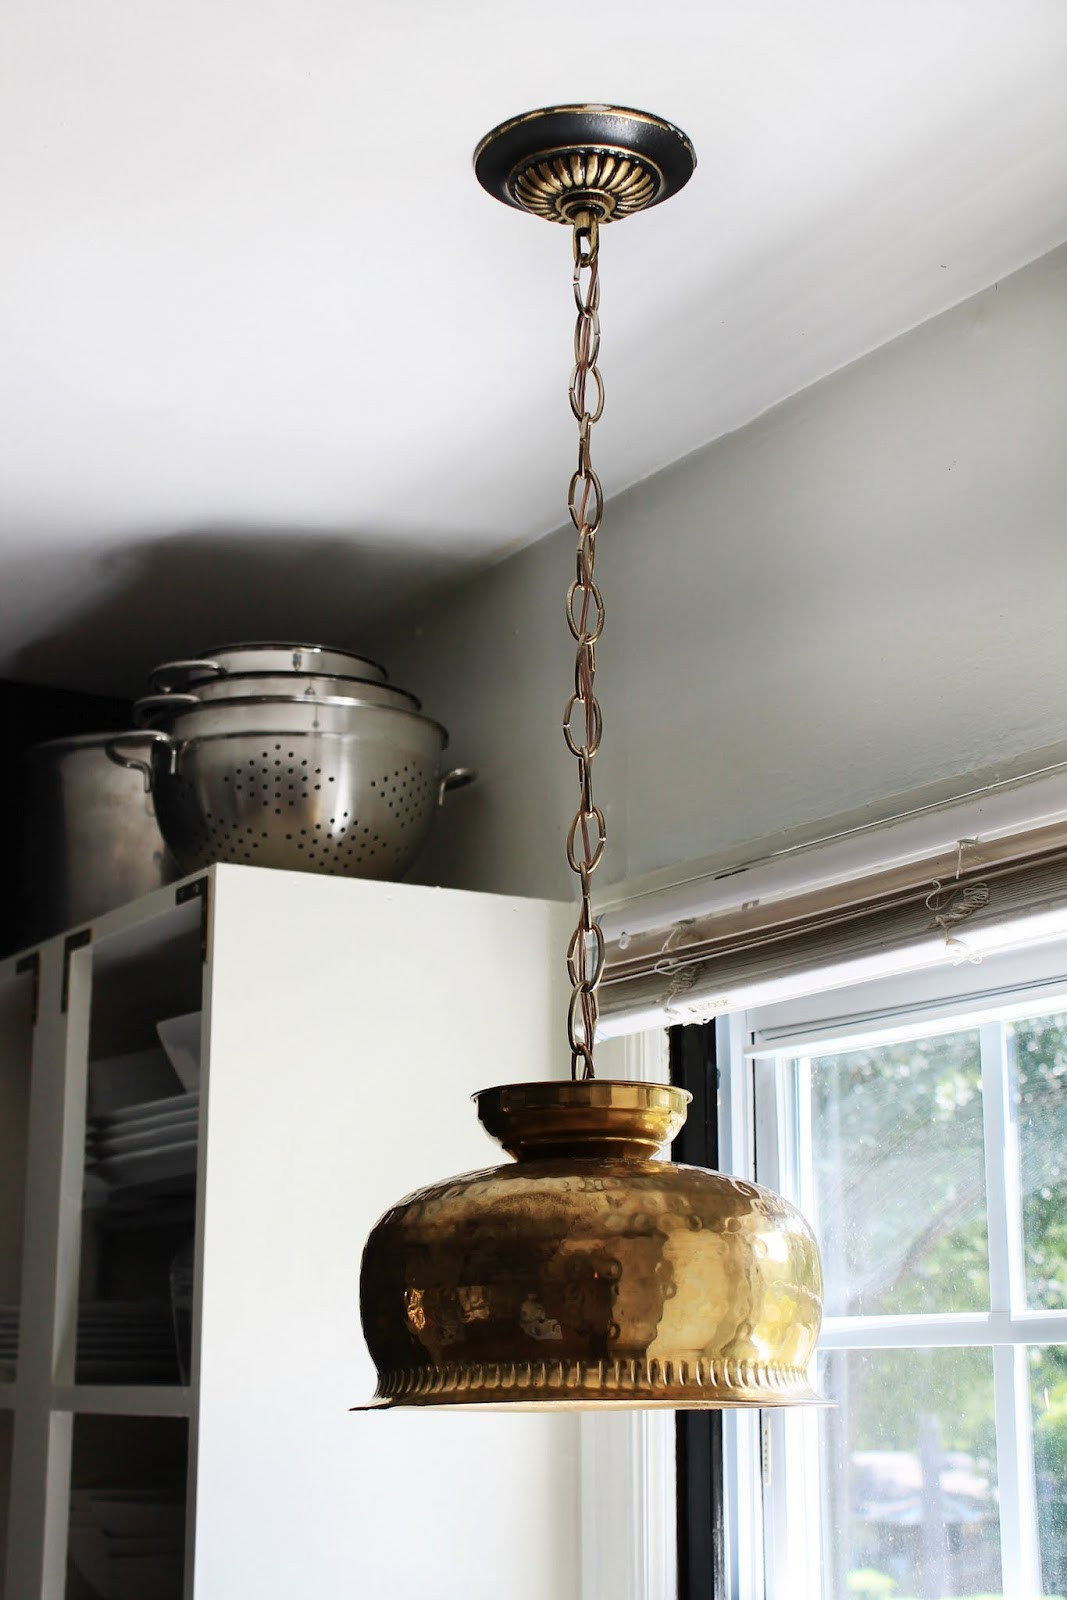 Best ideas about DIY Light Fixture
. Save or Pin hunted interior DIY Brass Bowl Pendant Kitchen Sneak Peek Now.